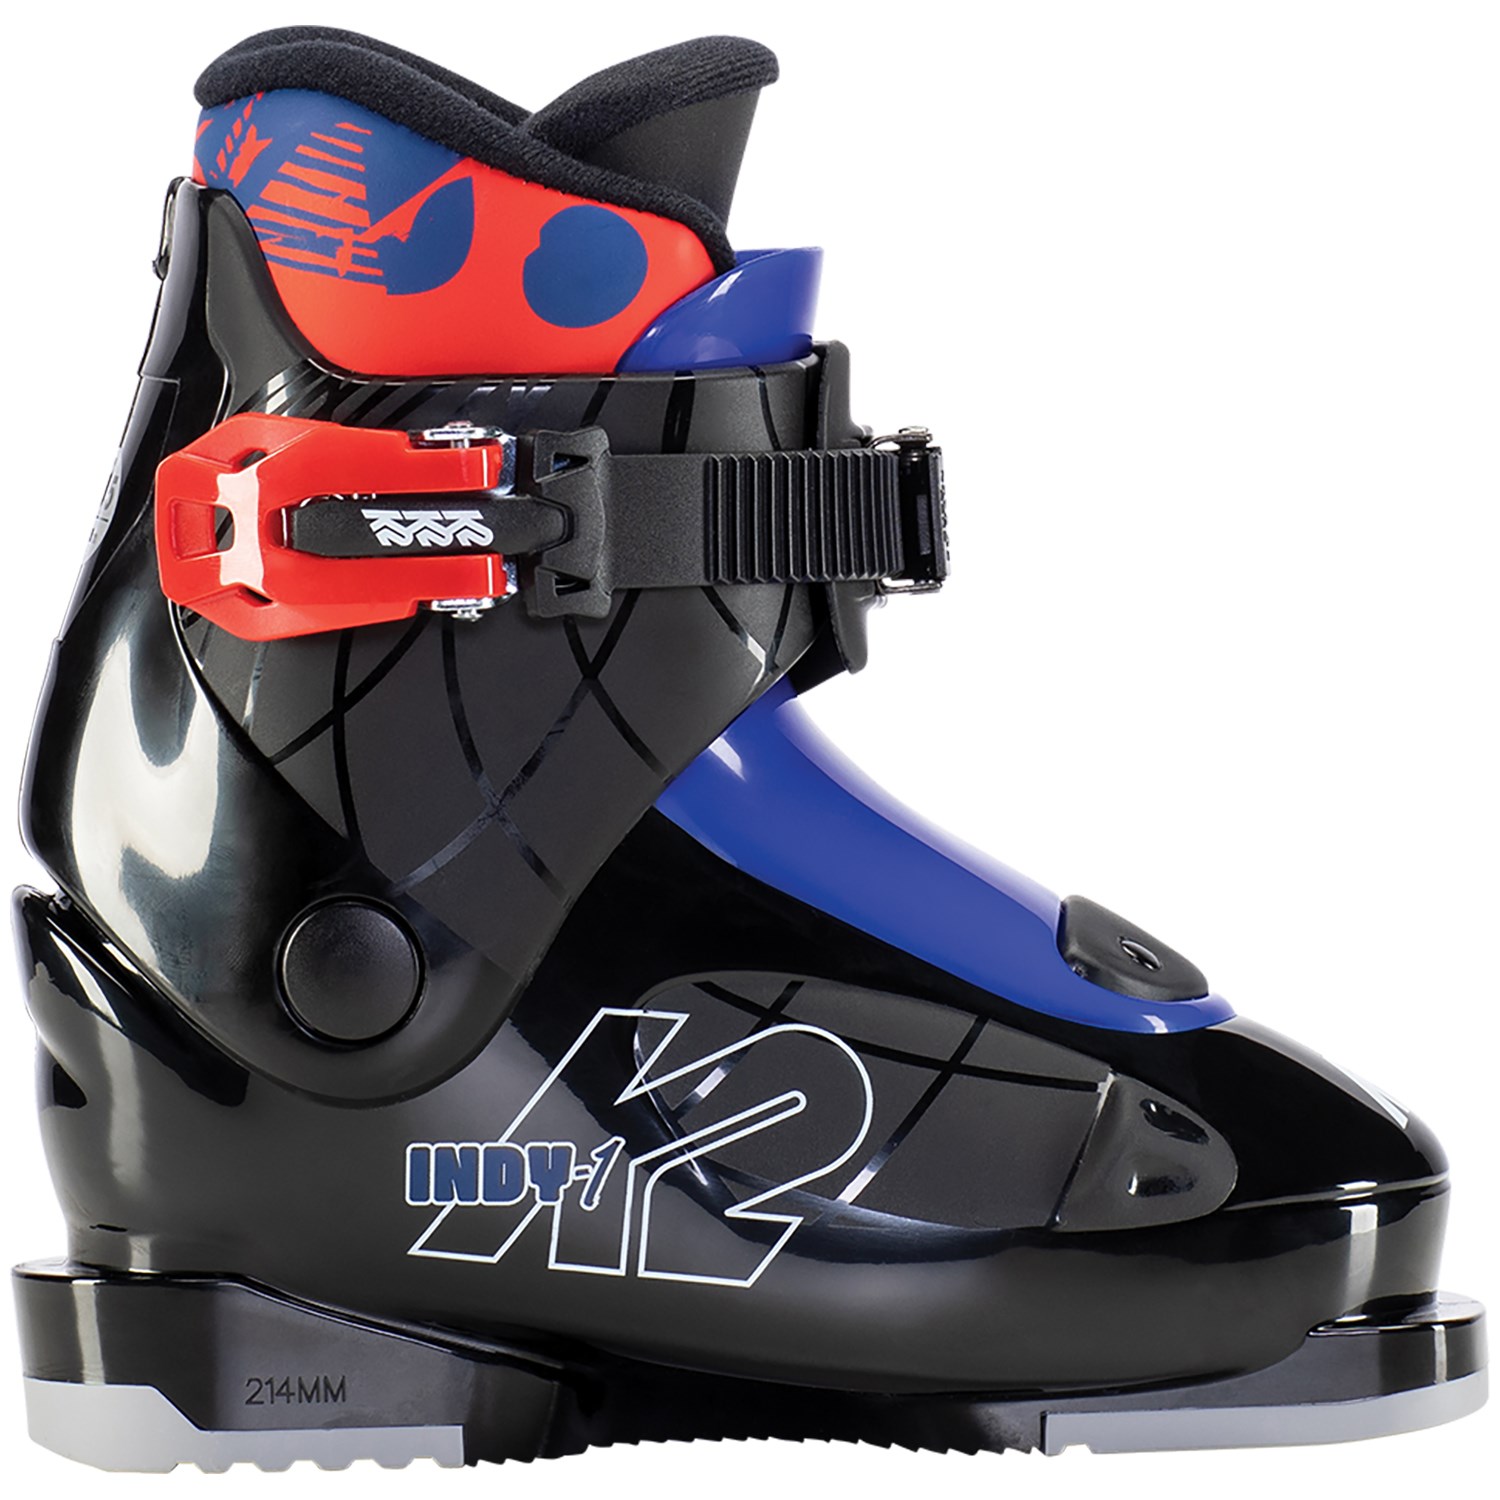 214 mm ski boot size